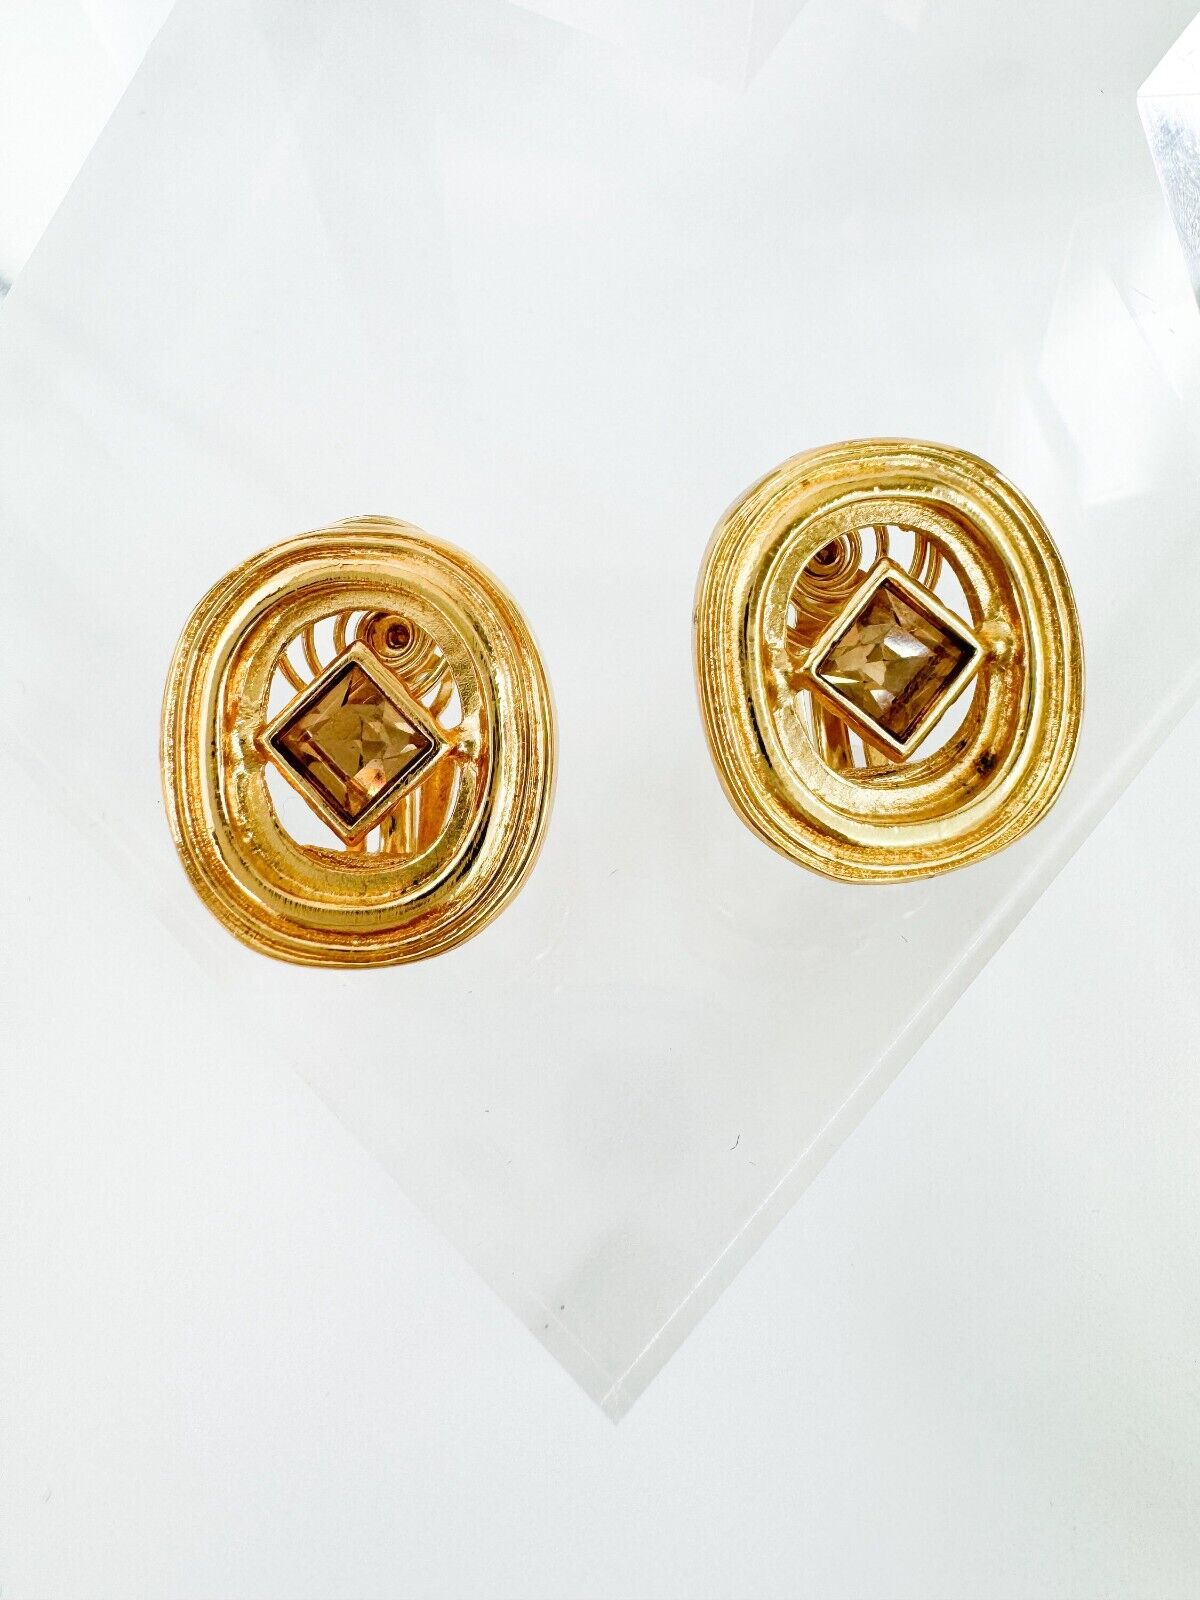 Vintage YSL Yves Saint Laurent Earrings, Gold Tone Oval Earrings, Made in France, Bridal earrings, Clip-on Earrings, Earrings large gold